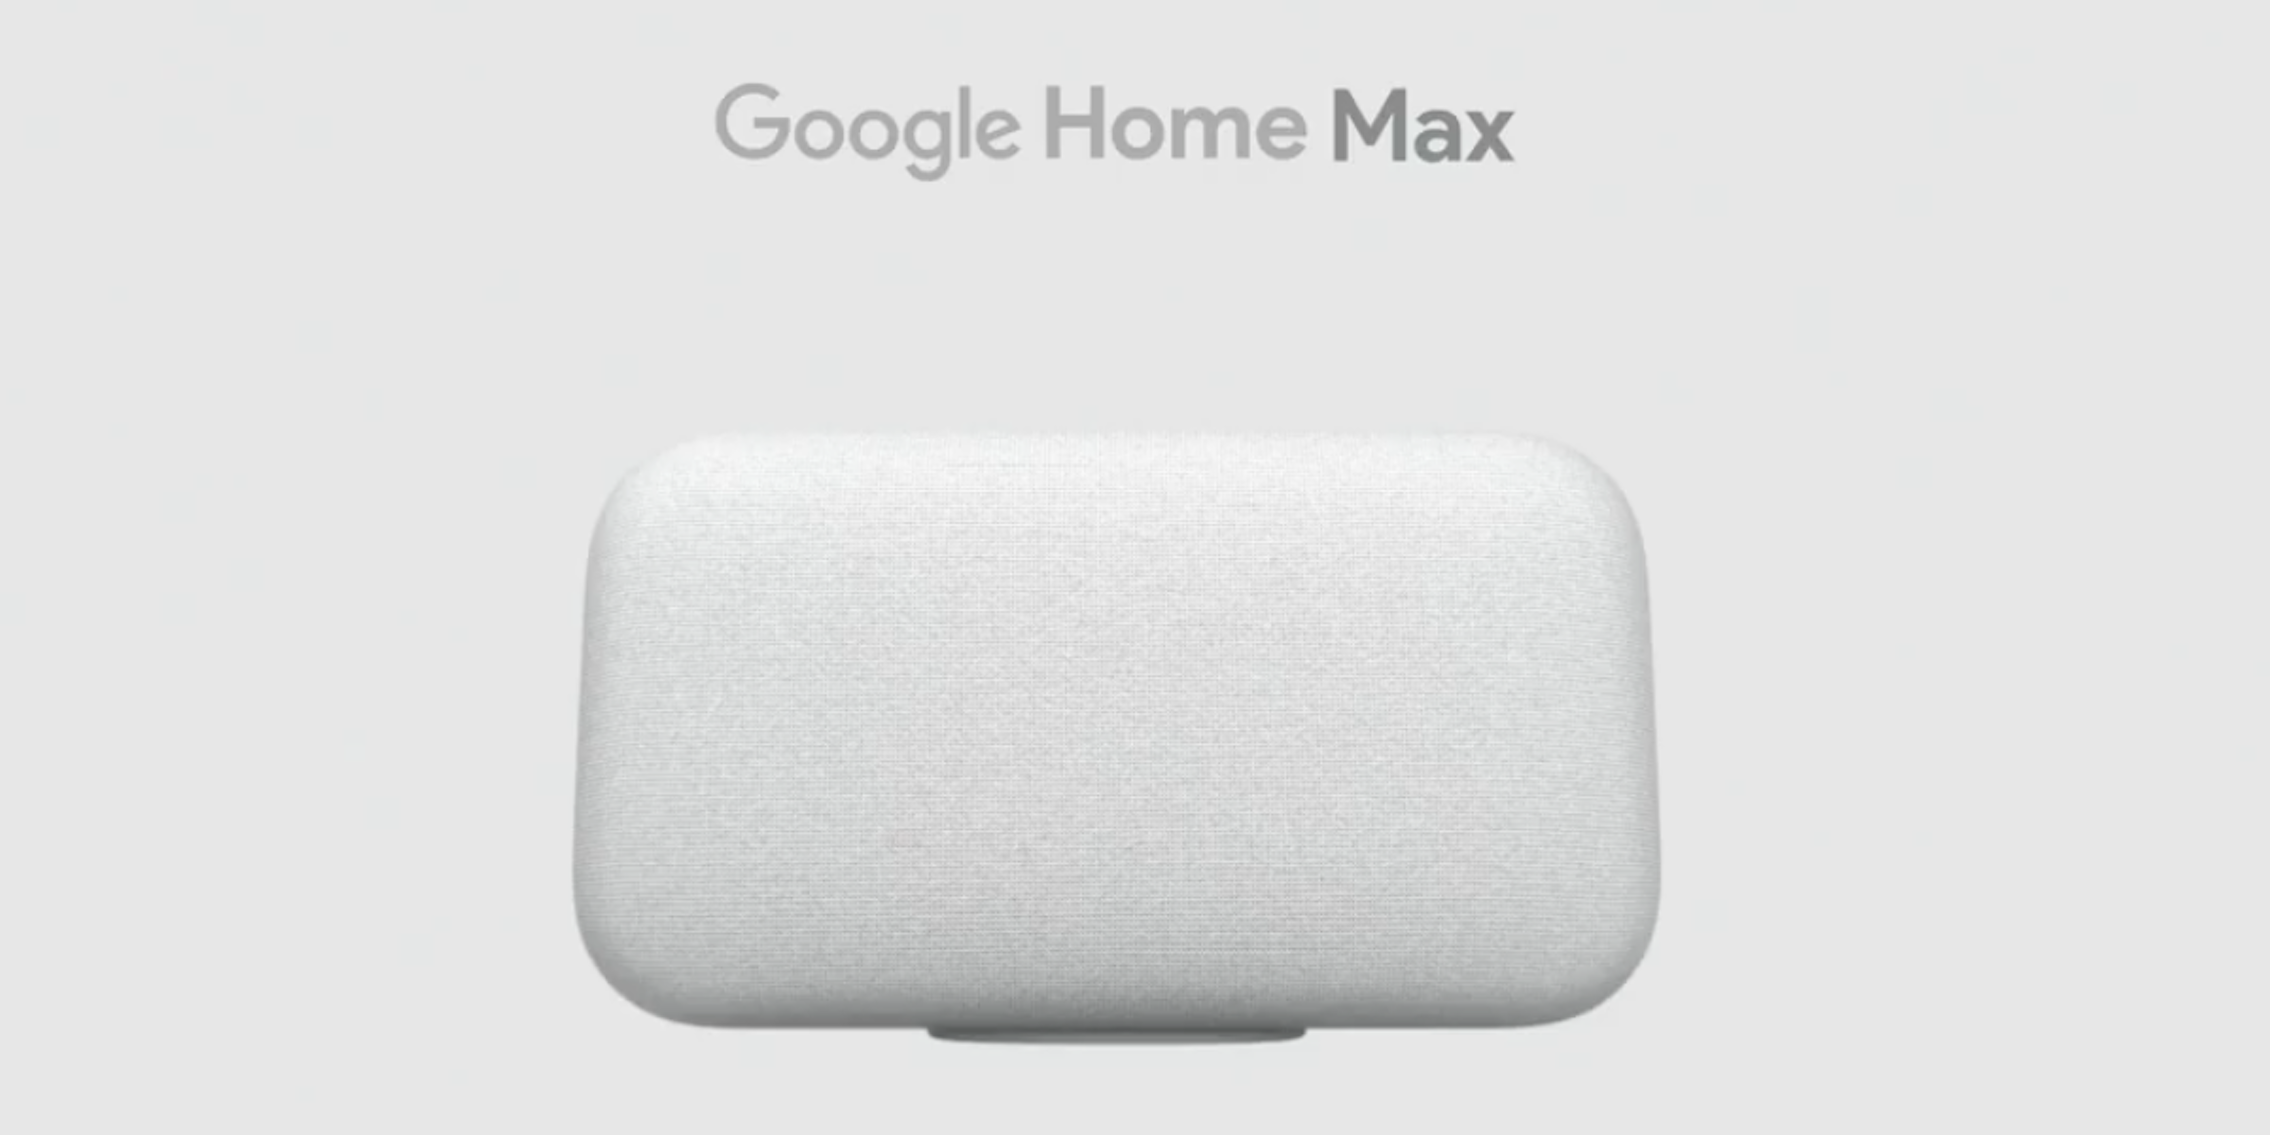 Google Home Max screen grab